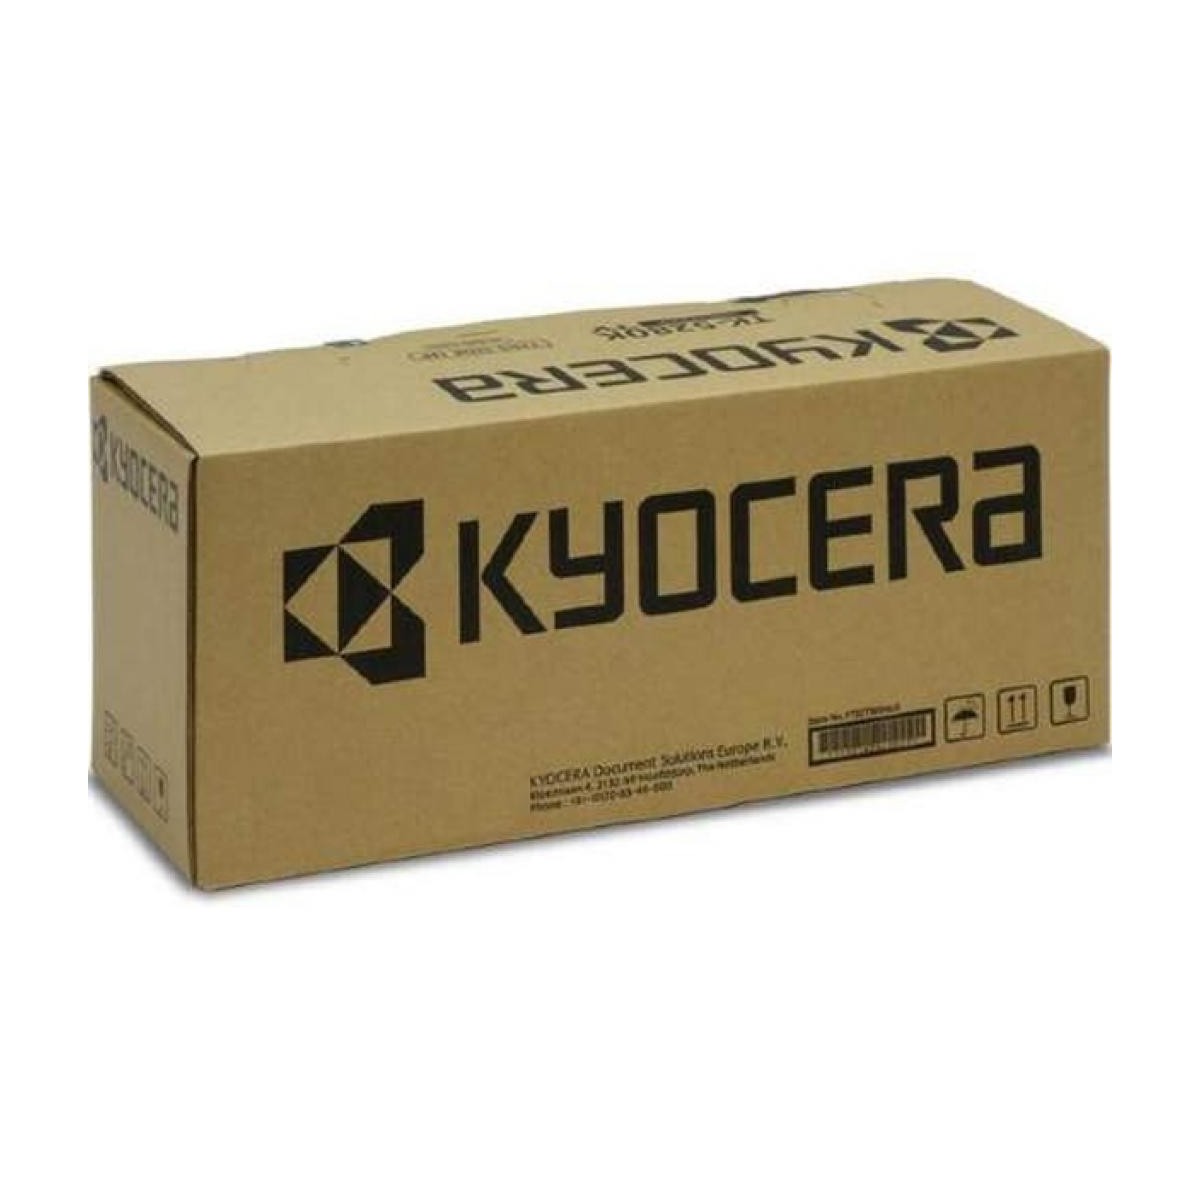 Kyocera DK-8505 - Original - Kyocera - TASKalfa 3050ci - 3550ci - 4550ci - 5550ci - 1 pc(s) - 600000 pages - Laser printing